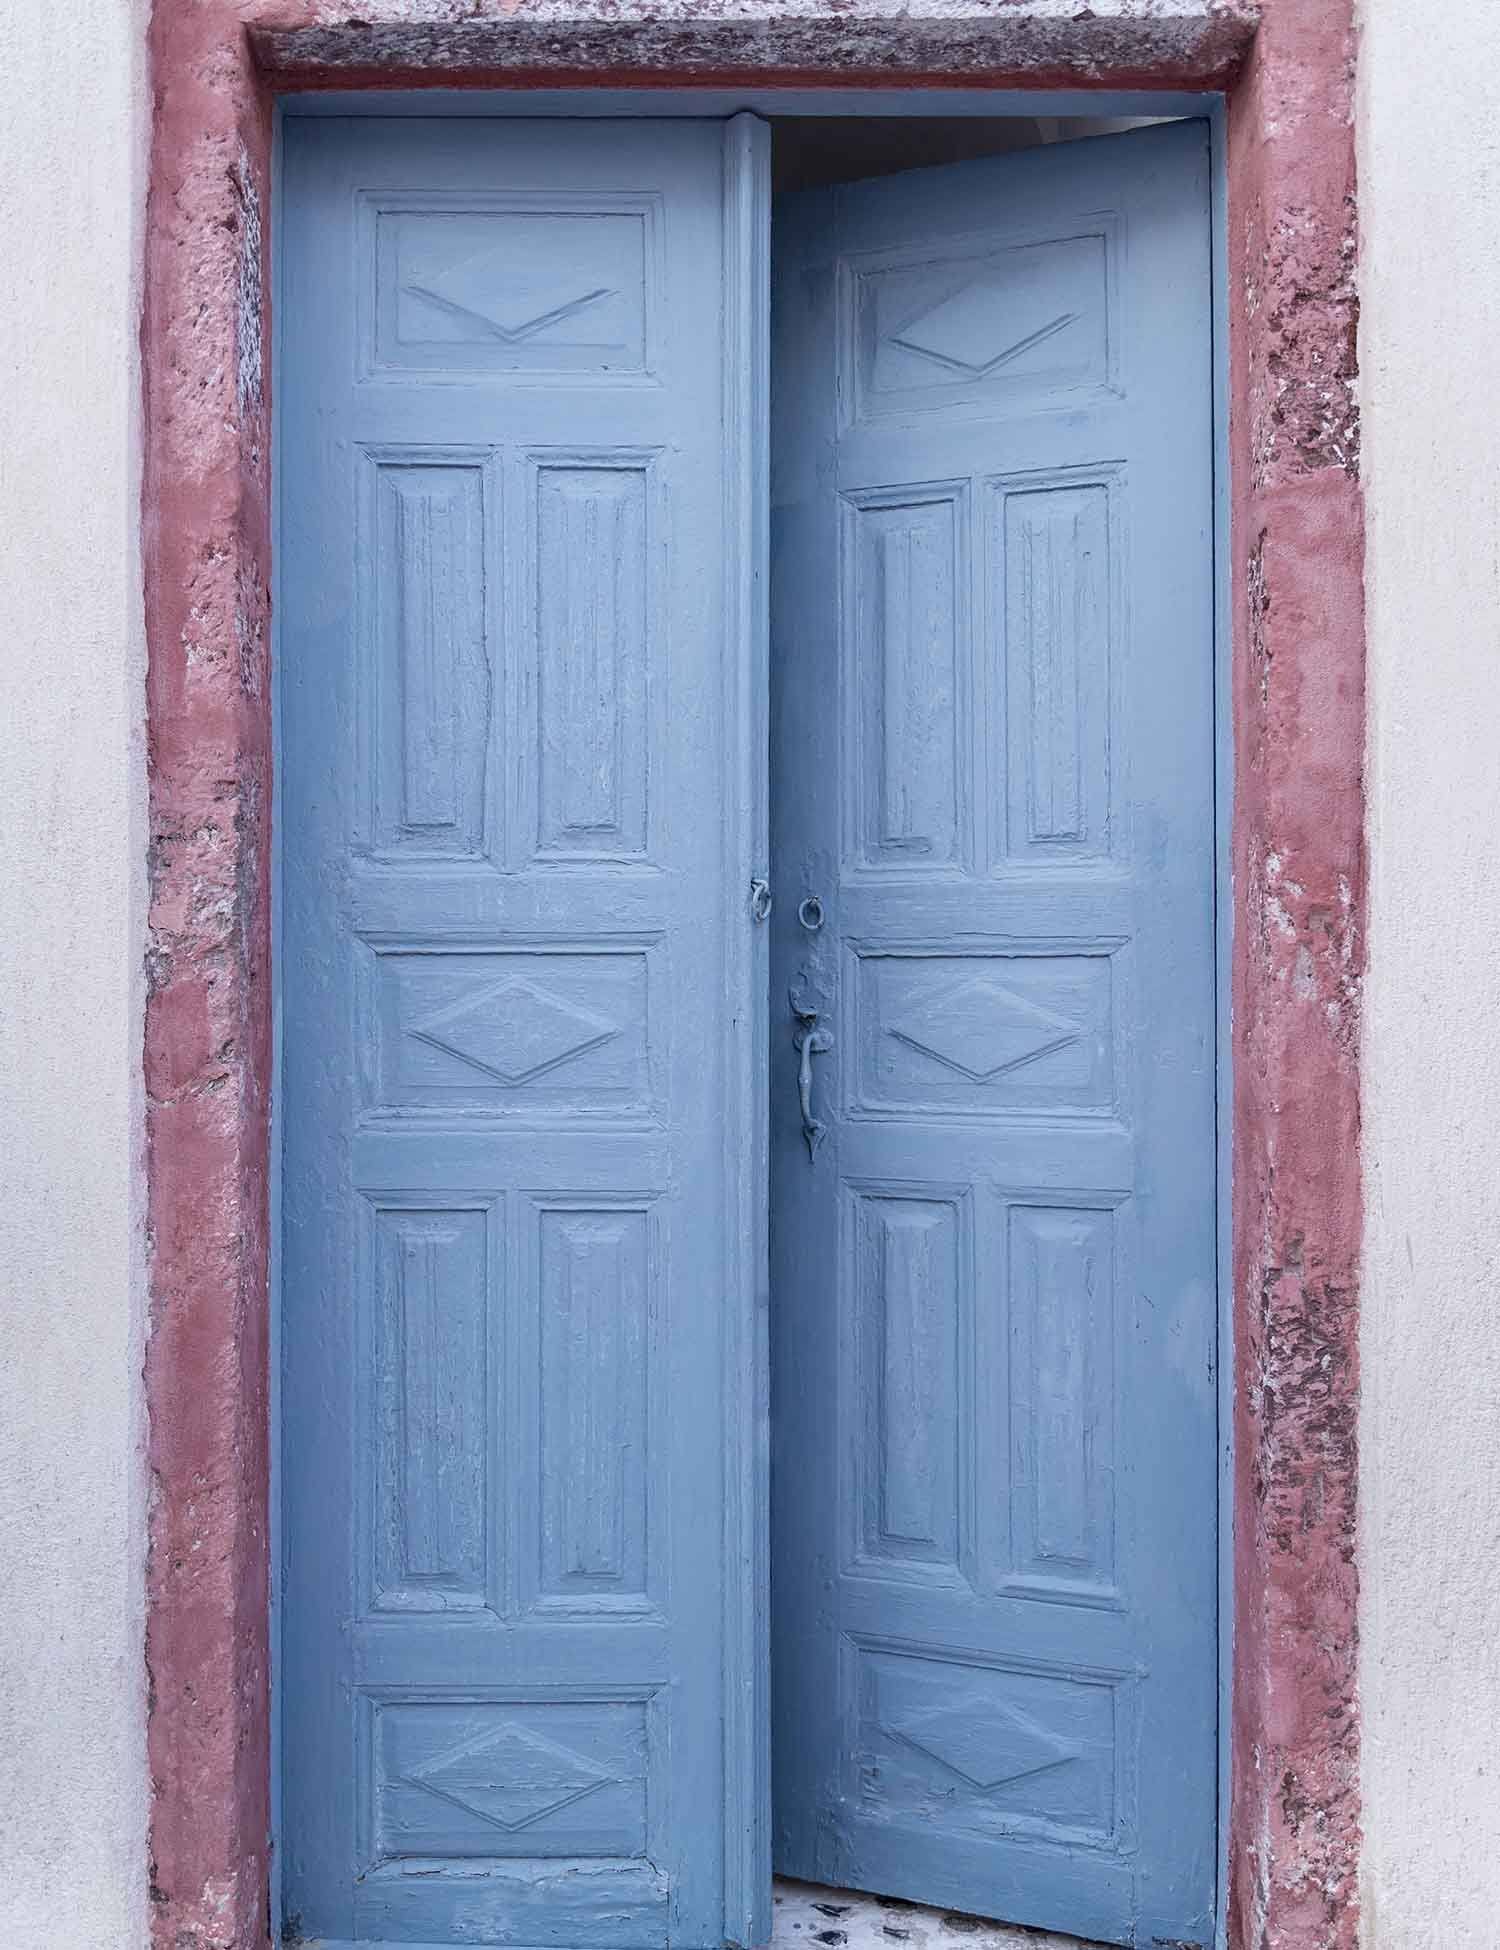 Blue Opening Wood Door Retro Wall Backdrop For Photography Shopbackdrop